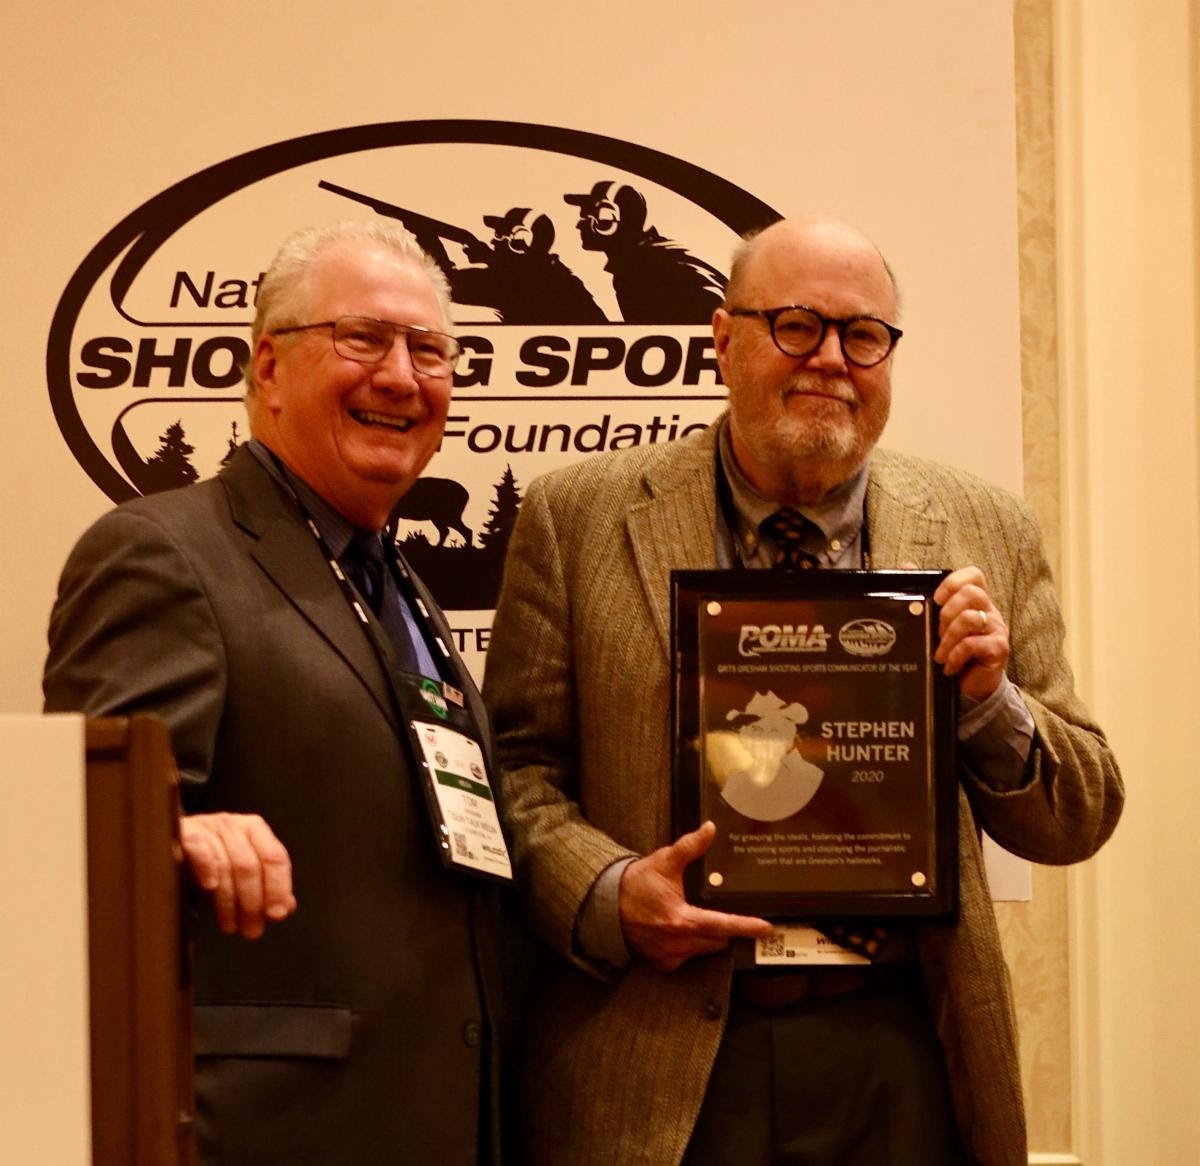 American Novelist Stephen Hunter Receives Prestigious Grits Gresham Award from POMA and the NSSF